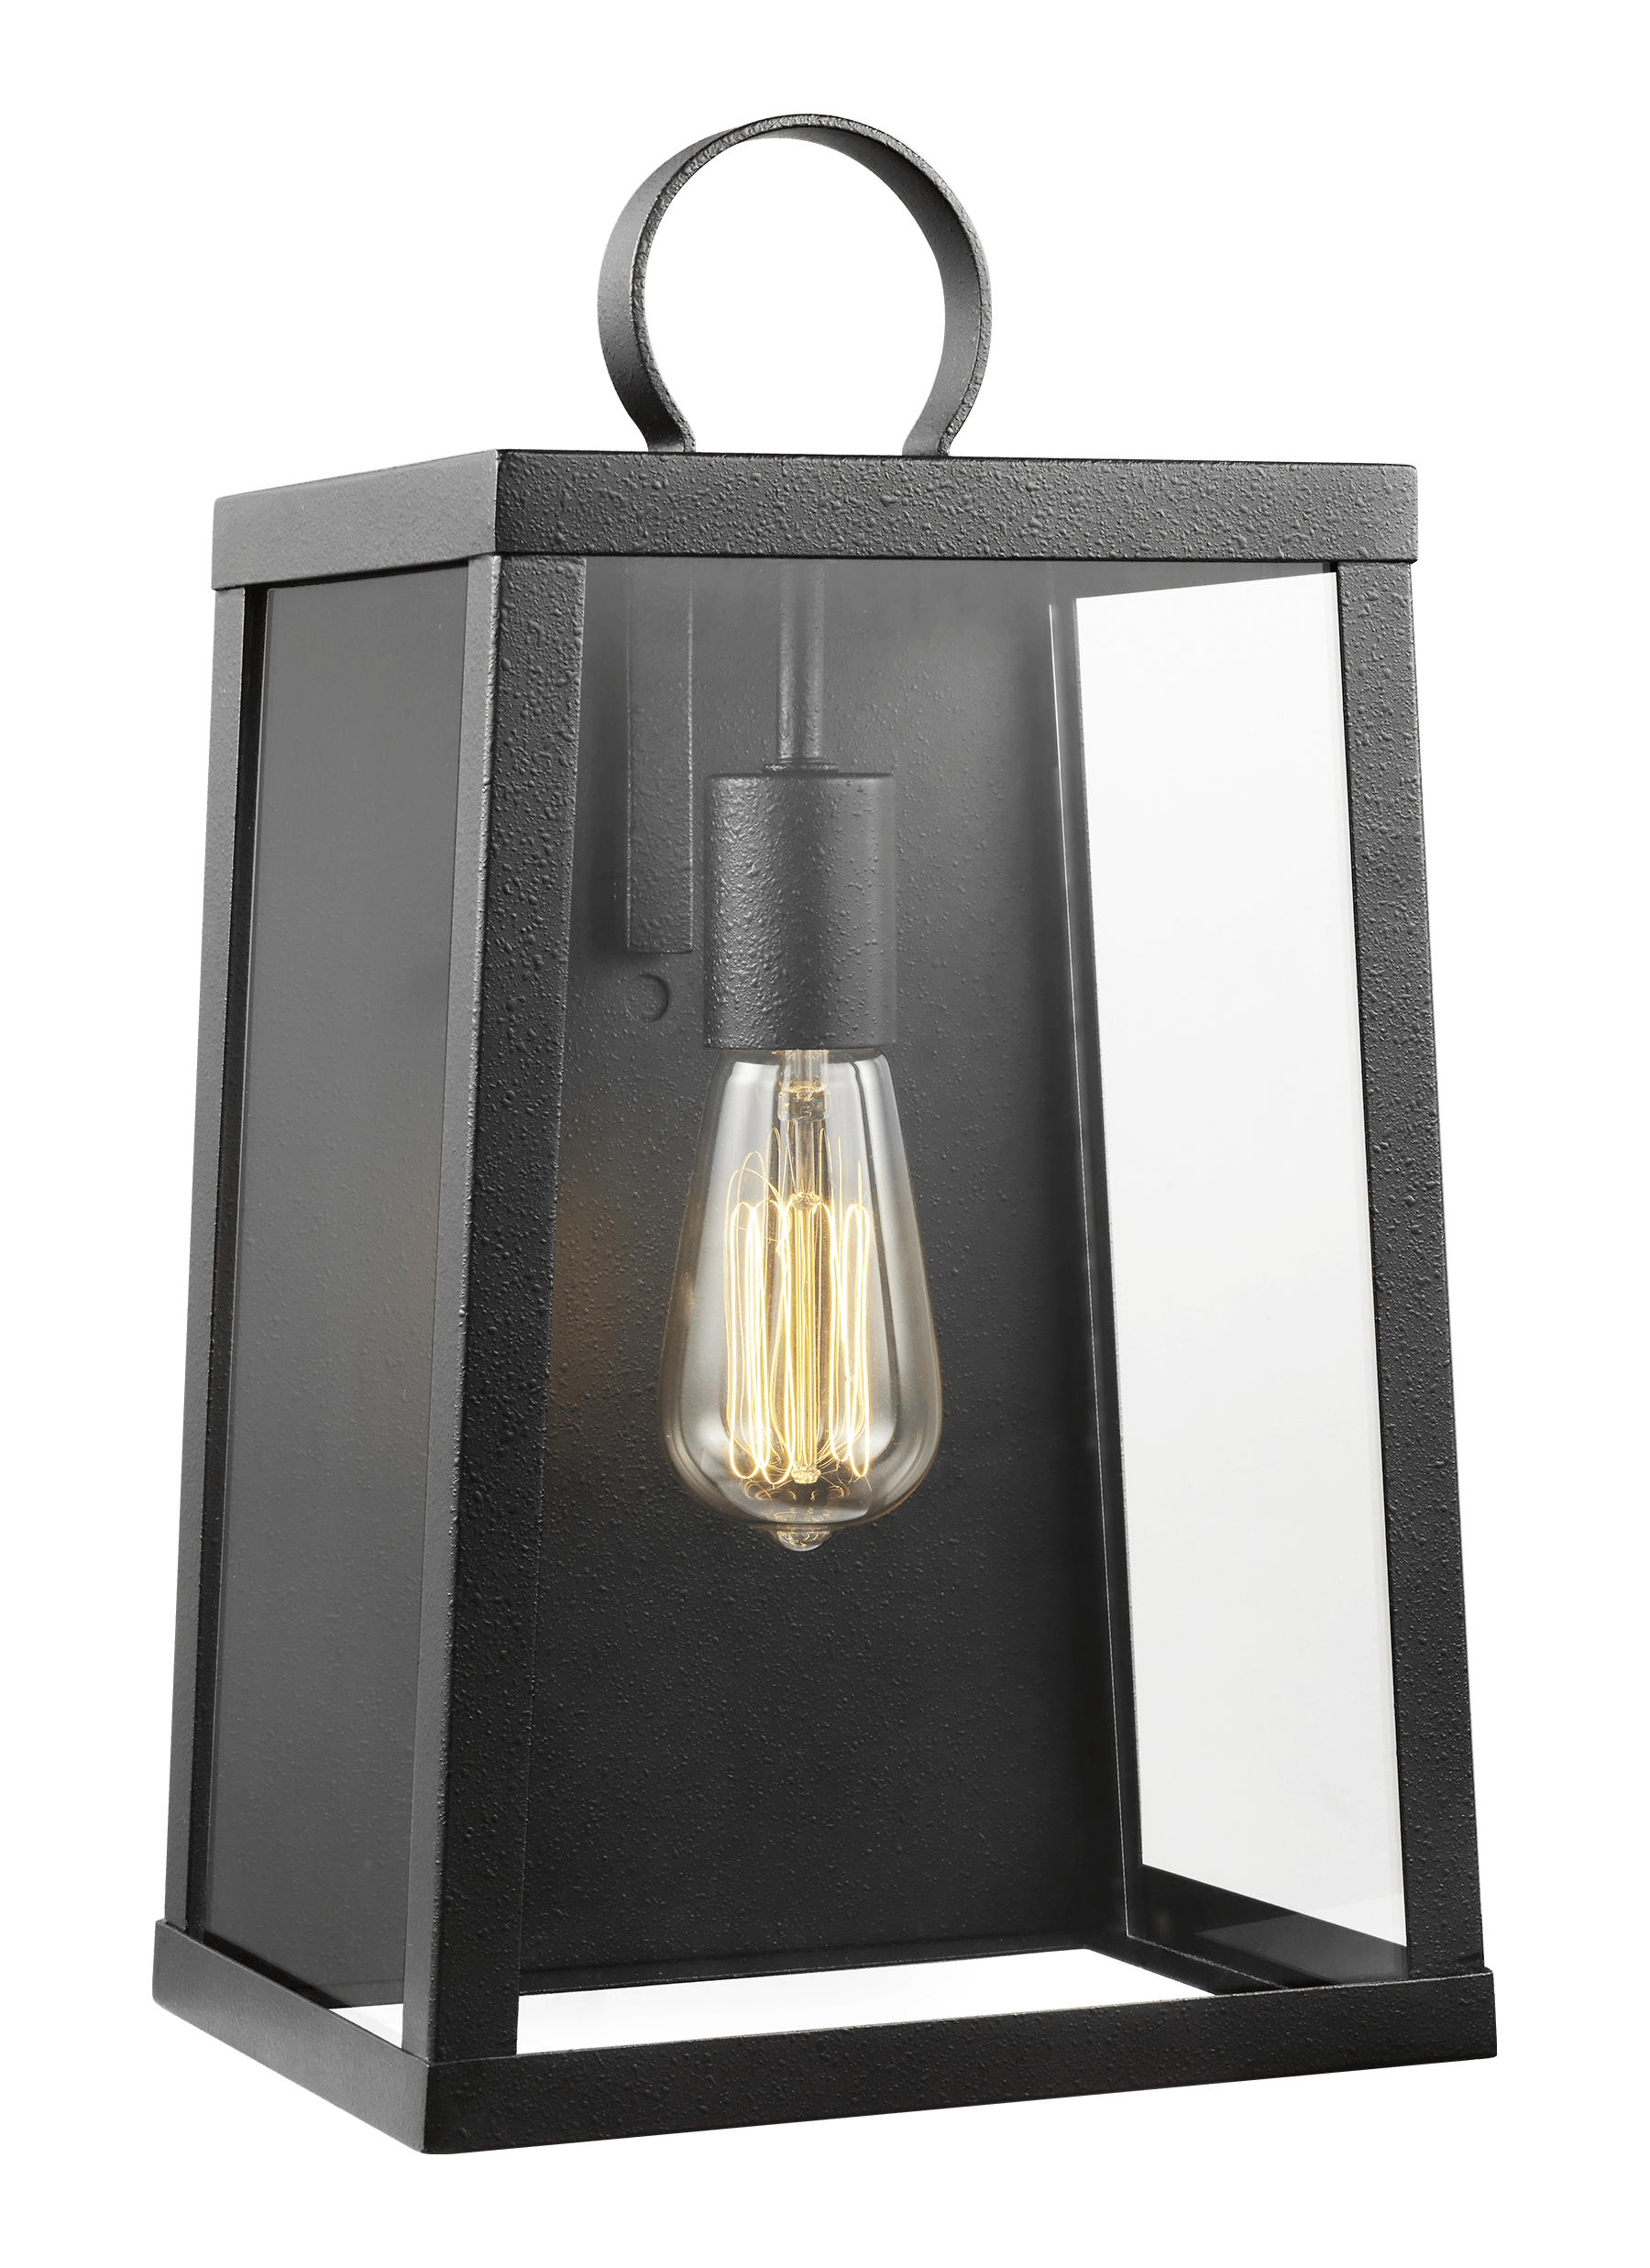 Marinus Large One Light Outdoor Wall Lantern - Blacksmith Outdoor Sea Gull Lighting 